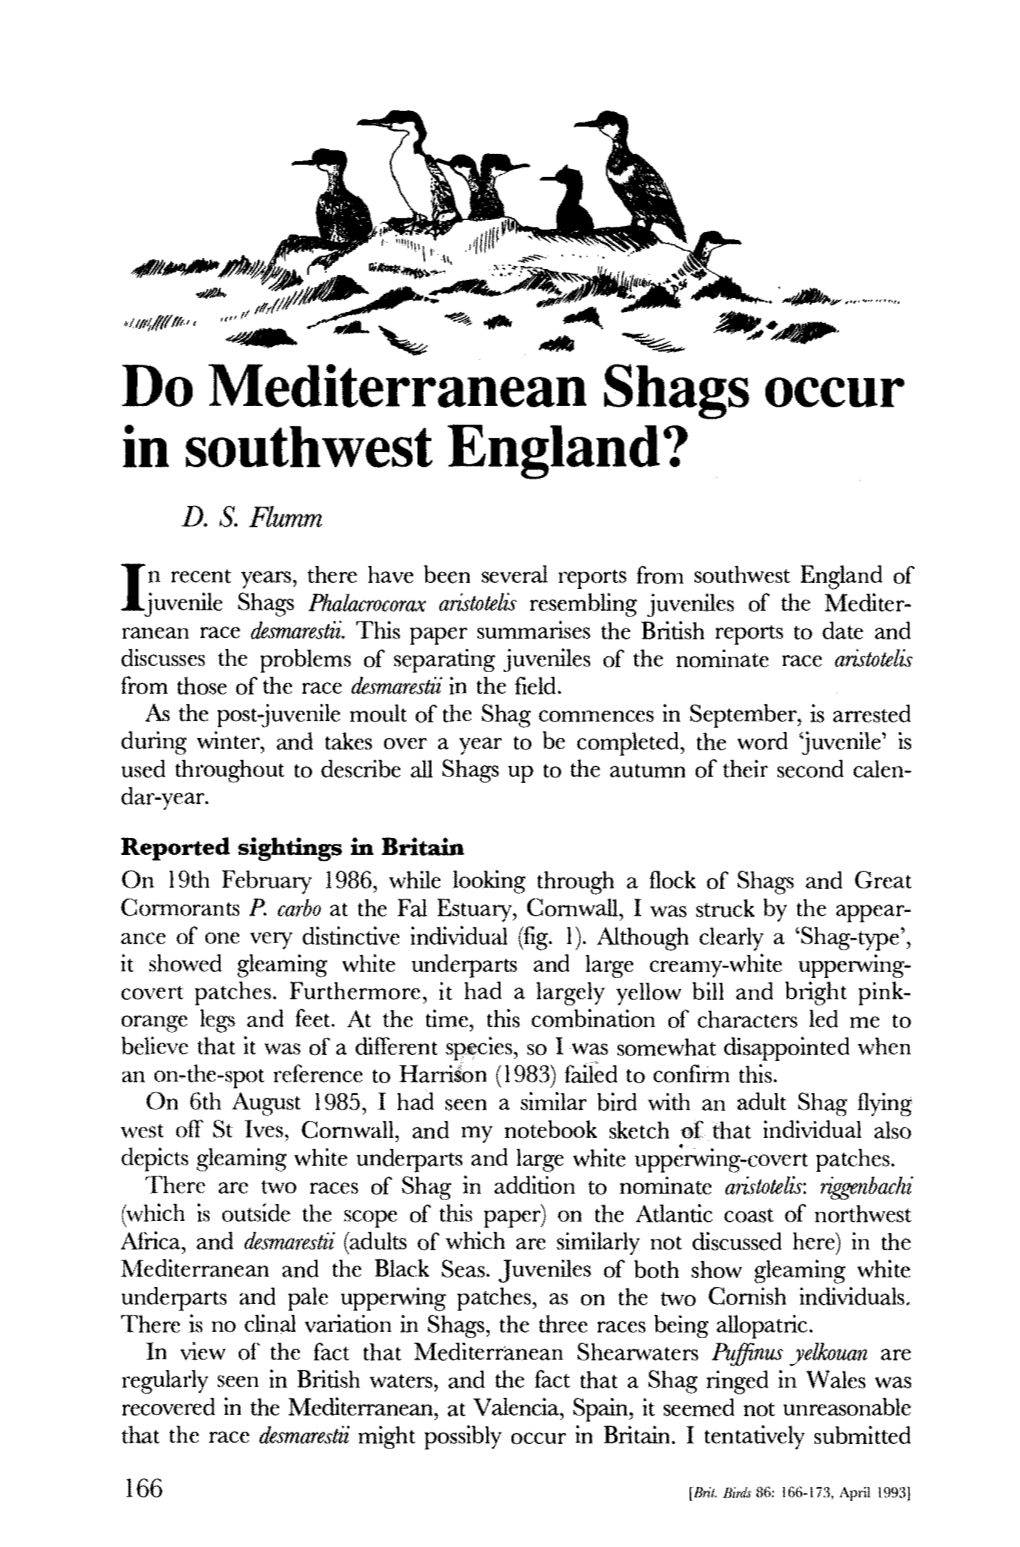 Do Mediterranean Shags Occur in Southwest England? D